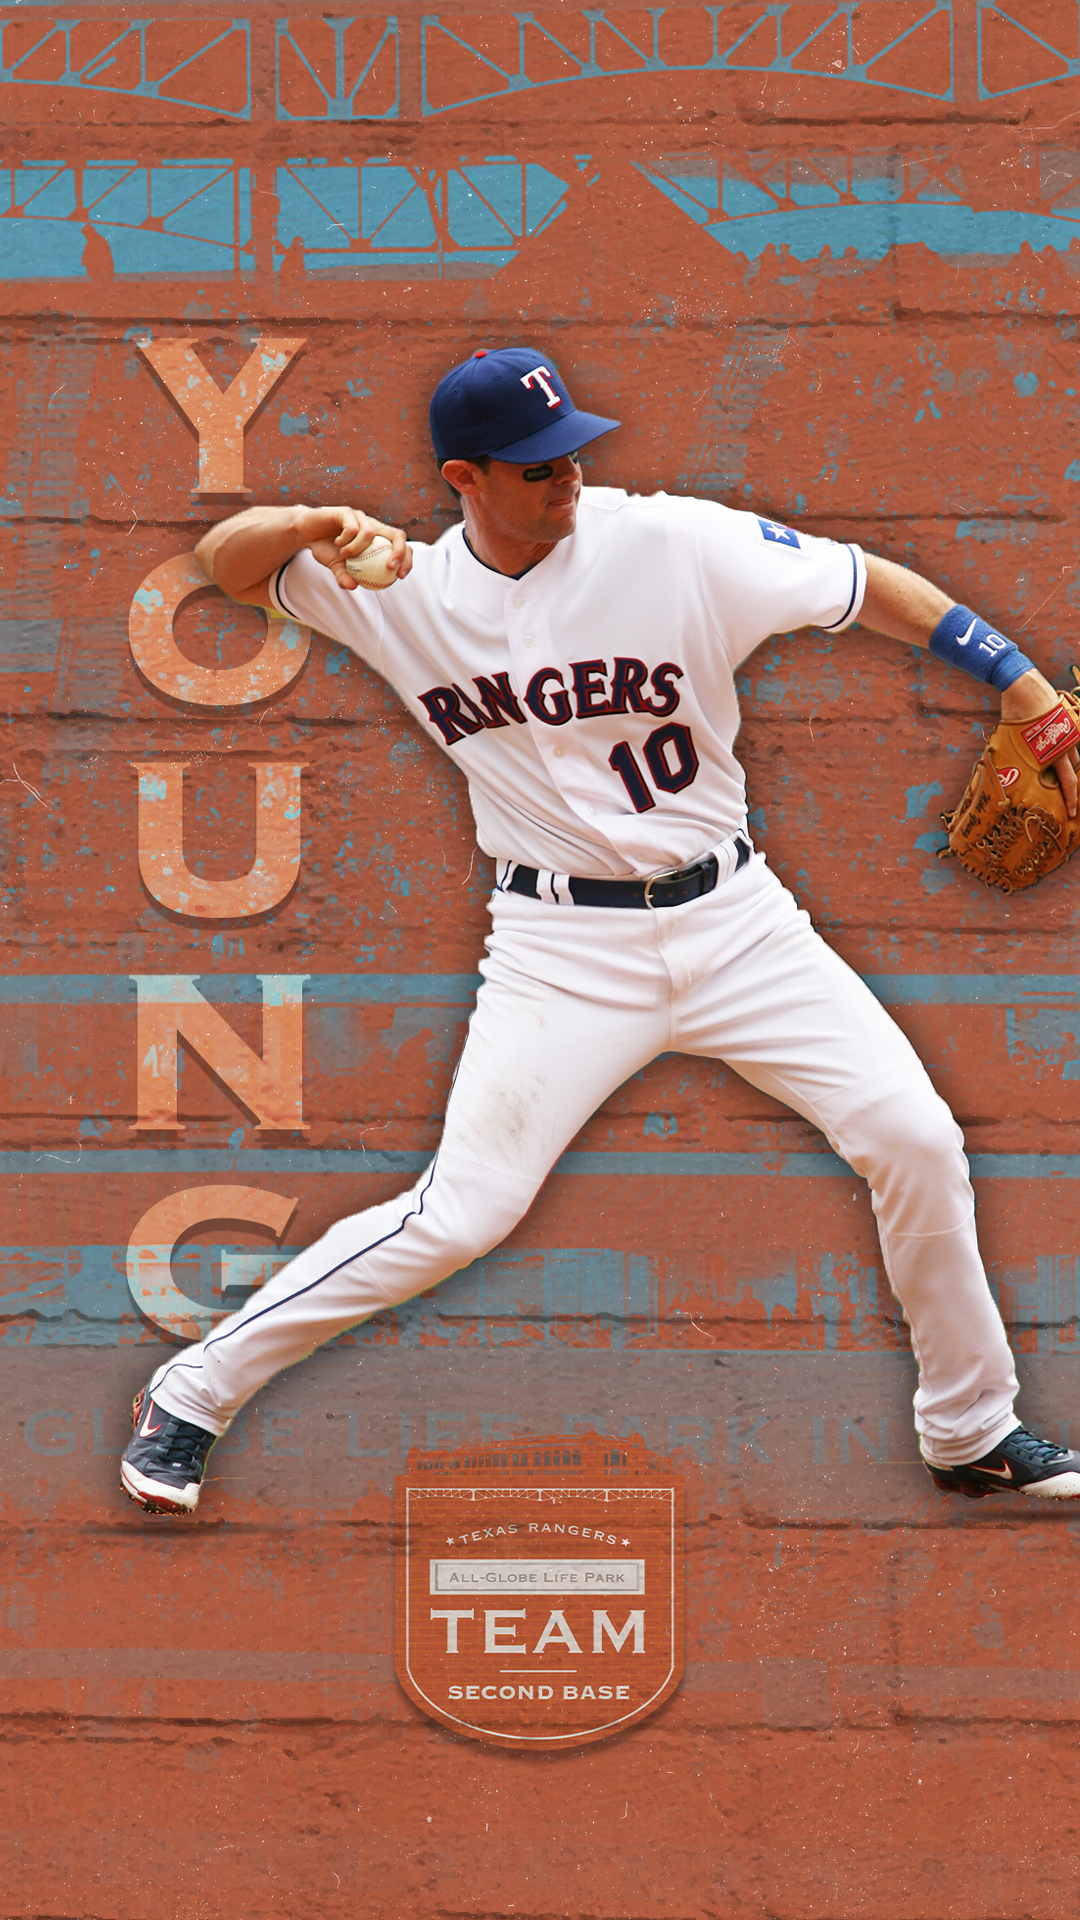 Final Season Wallpaper Texas Rangers